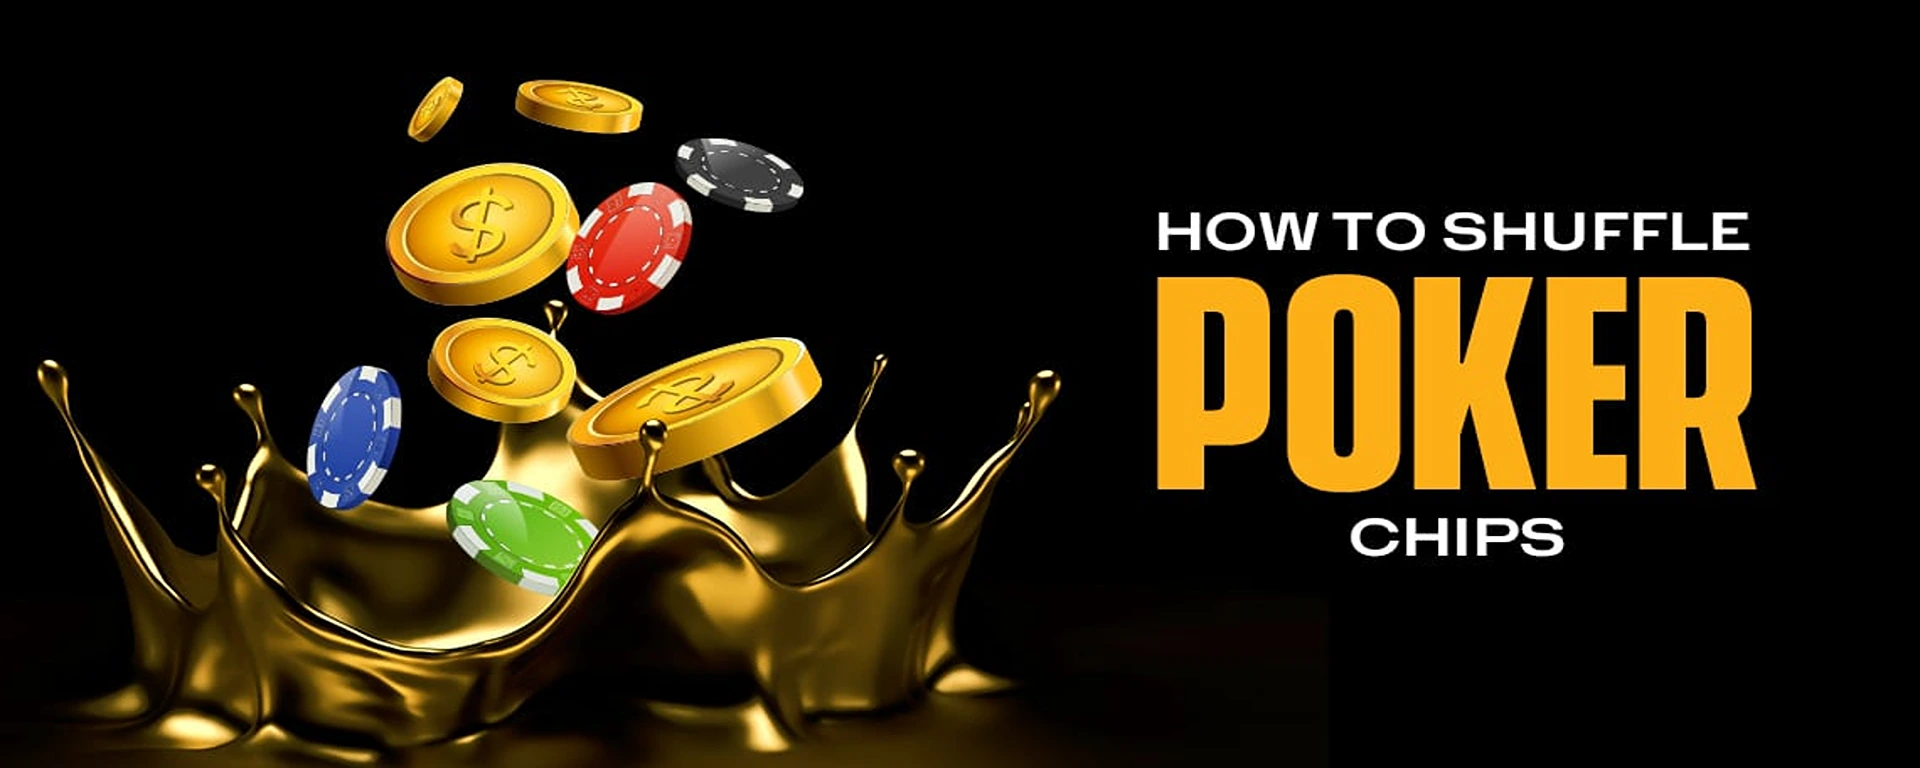 How To Shuffle Poker Chips